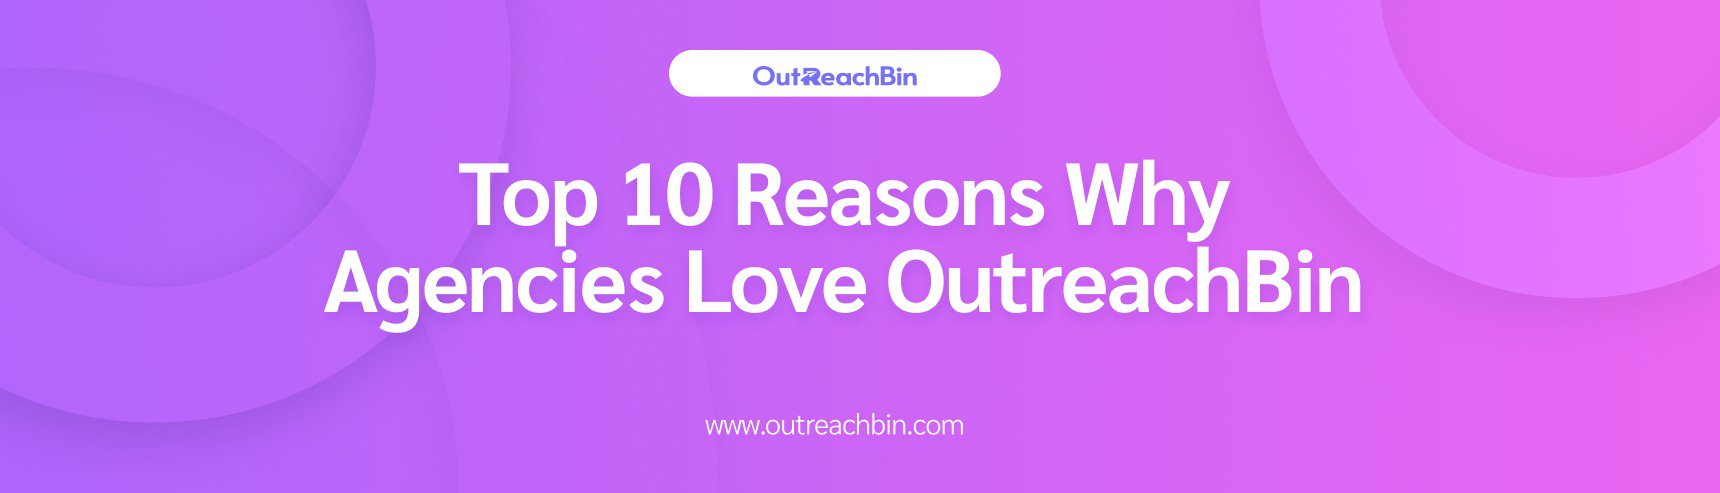 Top 10 Reasons Why Agencies Love OutreachBin cover